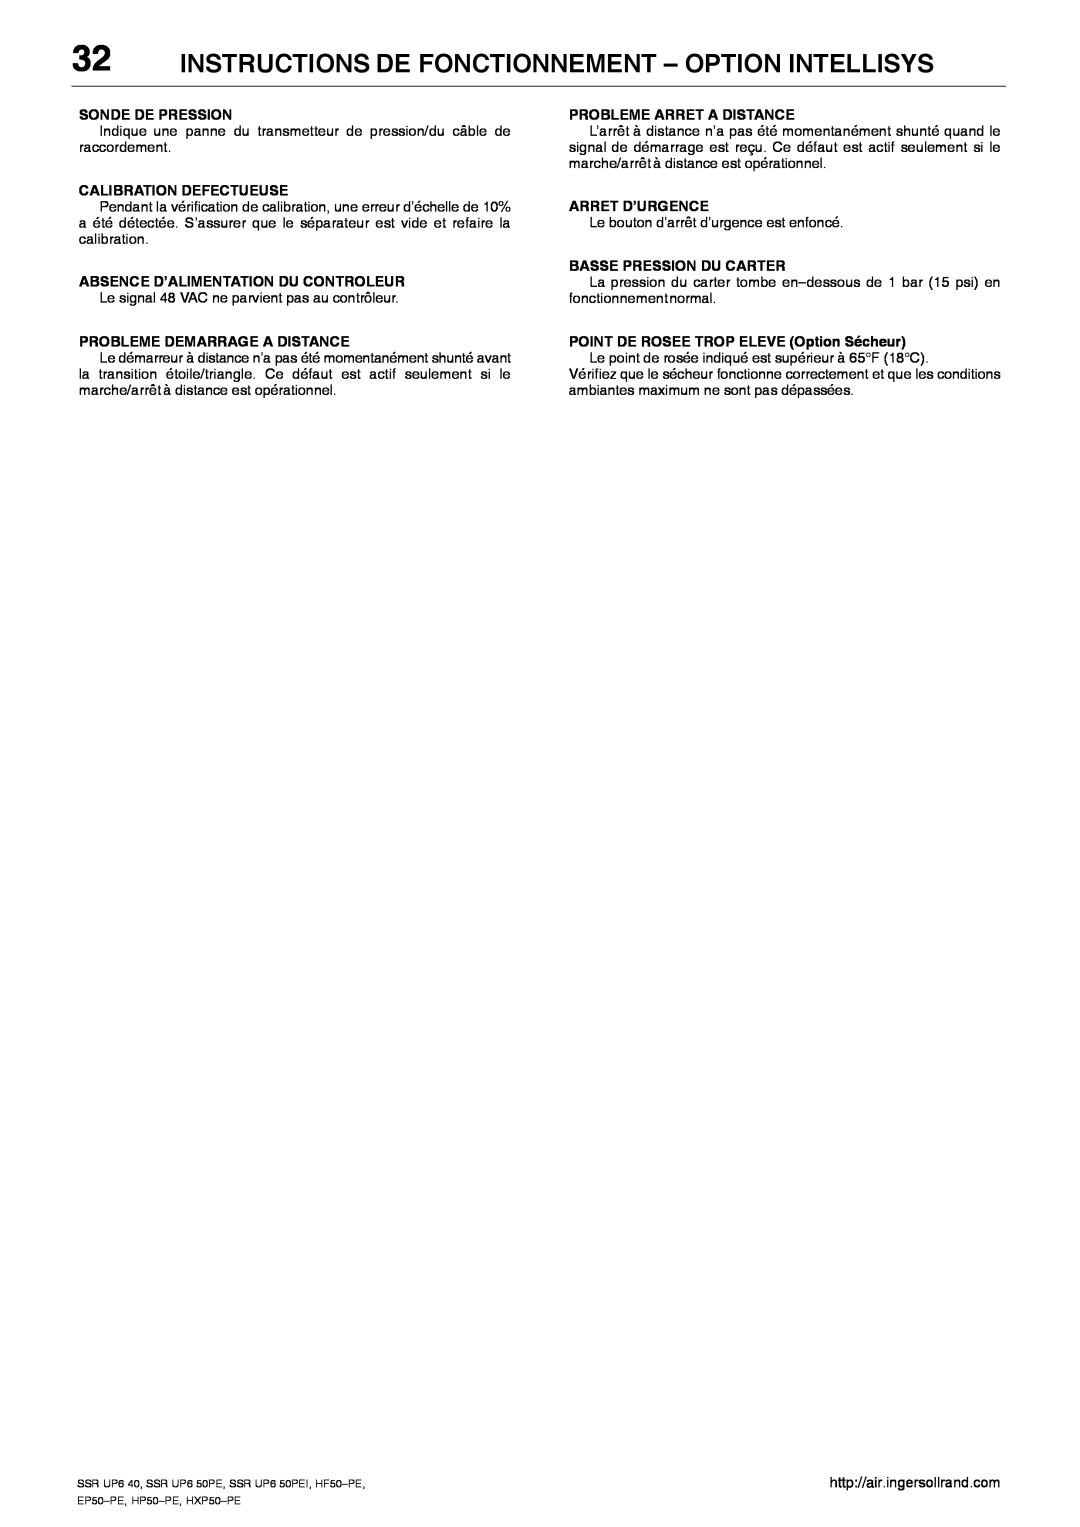 Ingersoll-Rand HXP50-PE, SSR UP6 40, SSR UP6 50PEI HF50-PE, EP50-PE Instructions De Fonctionnement - Option Intellisys 